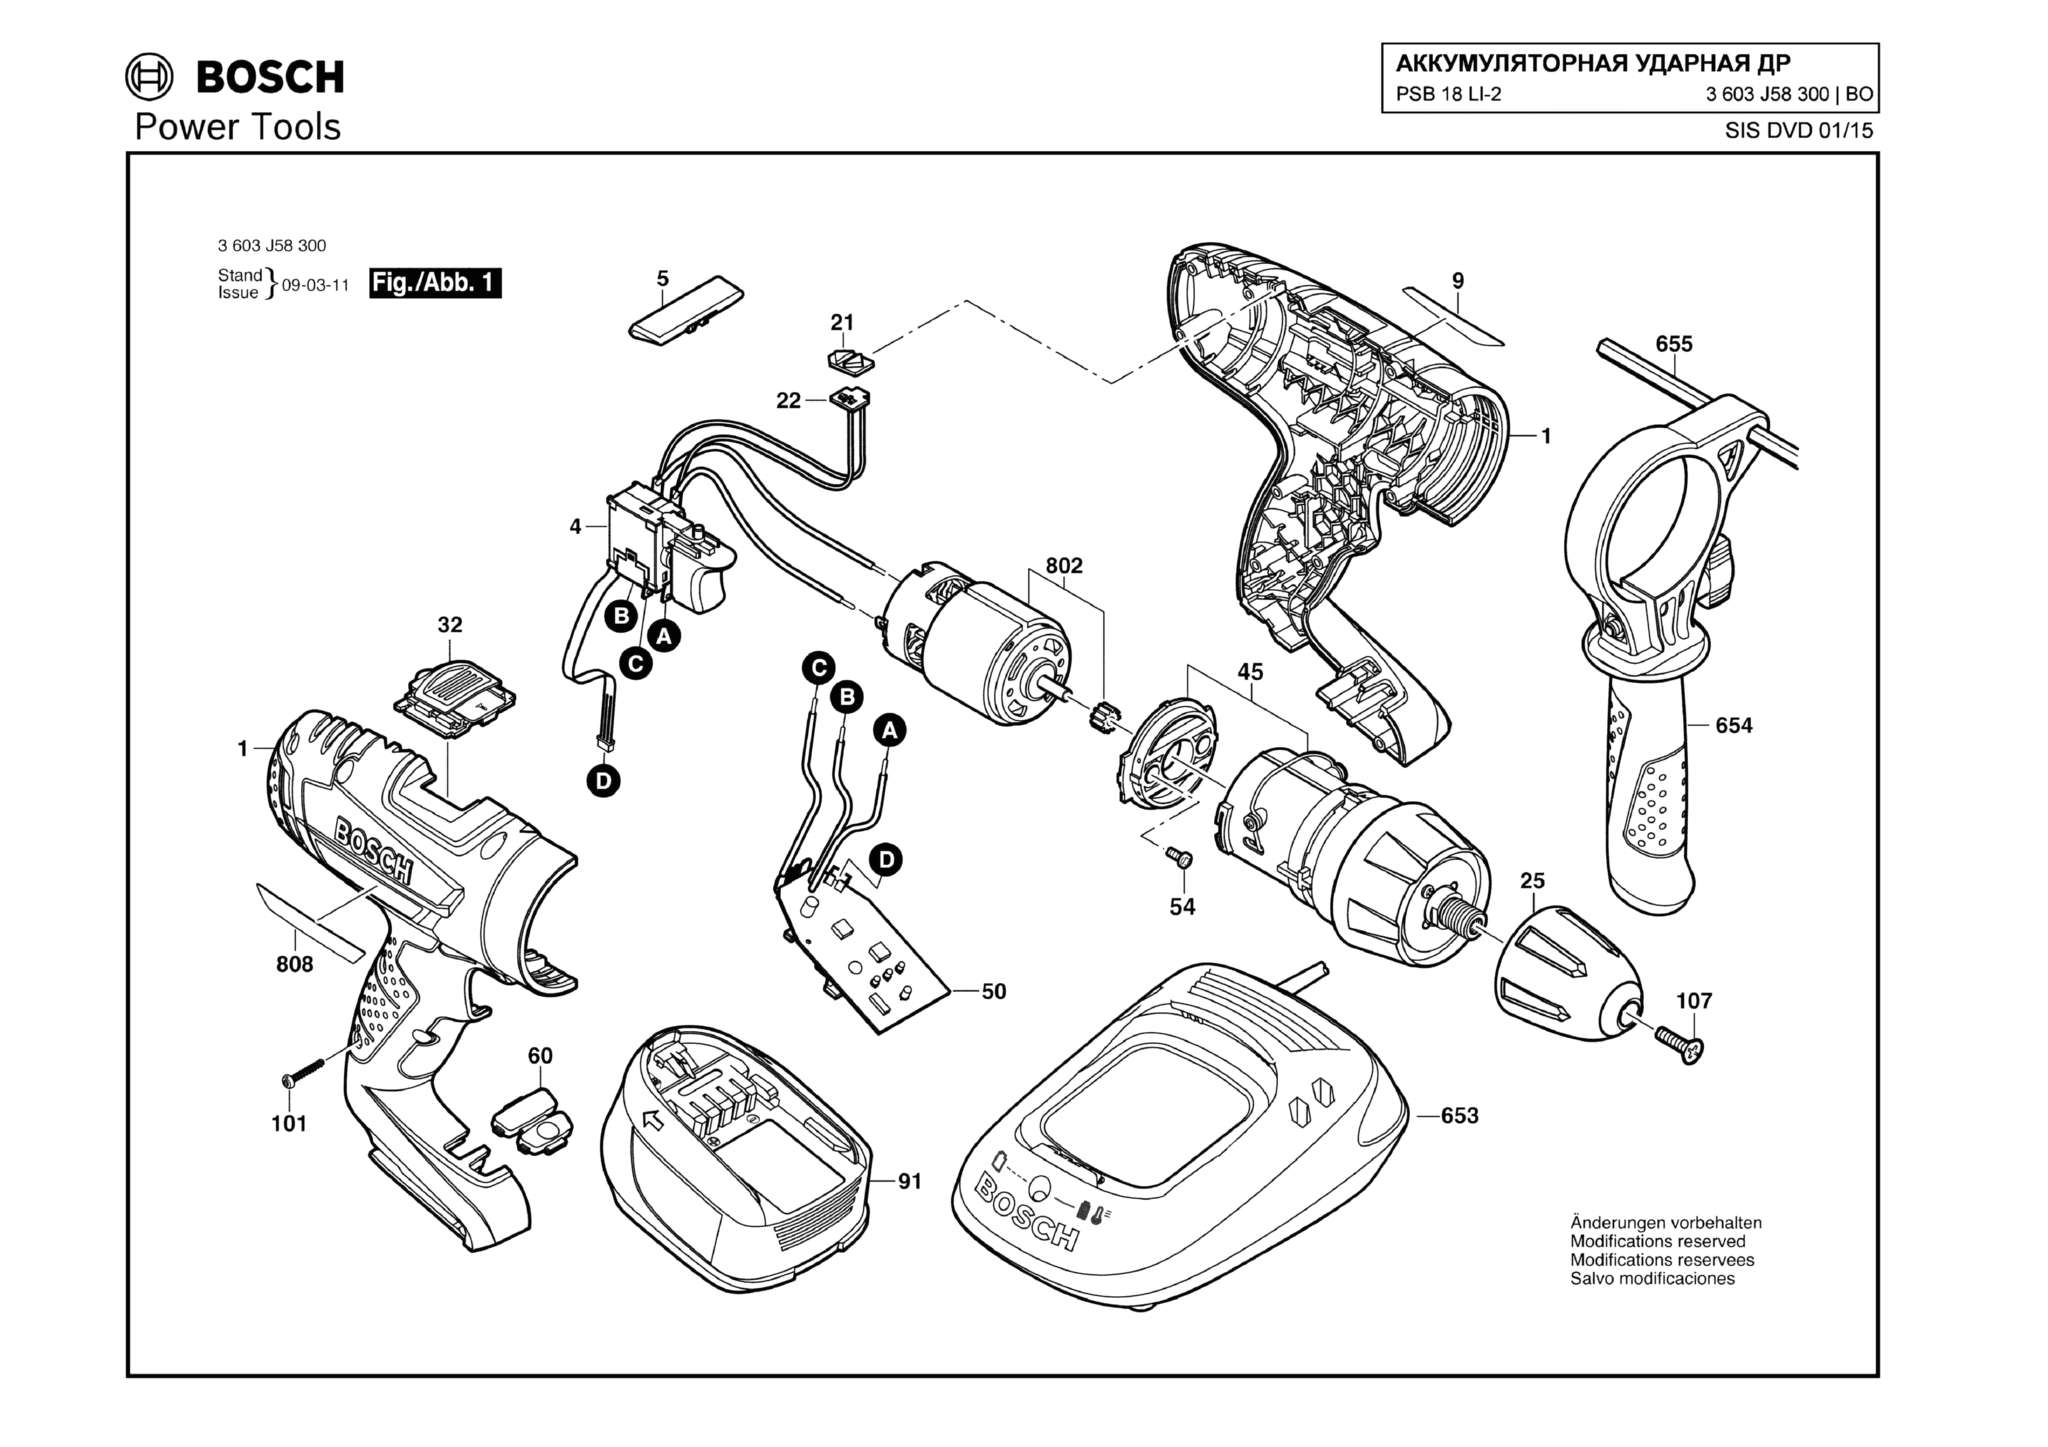 Запчасти, схема и деталировка Bosch PSB 18 LI-2 (ТИП 3603J58300)